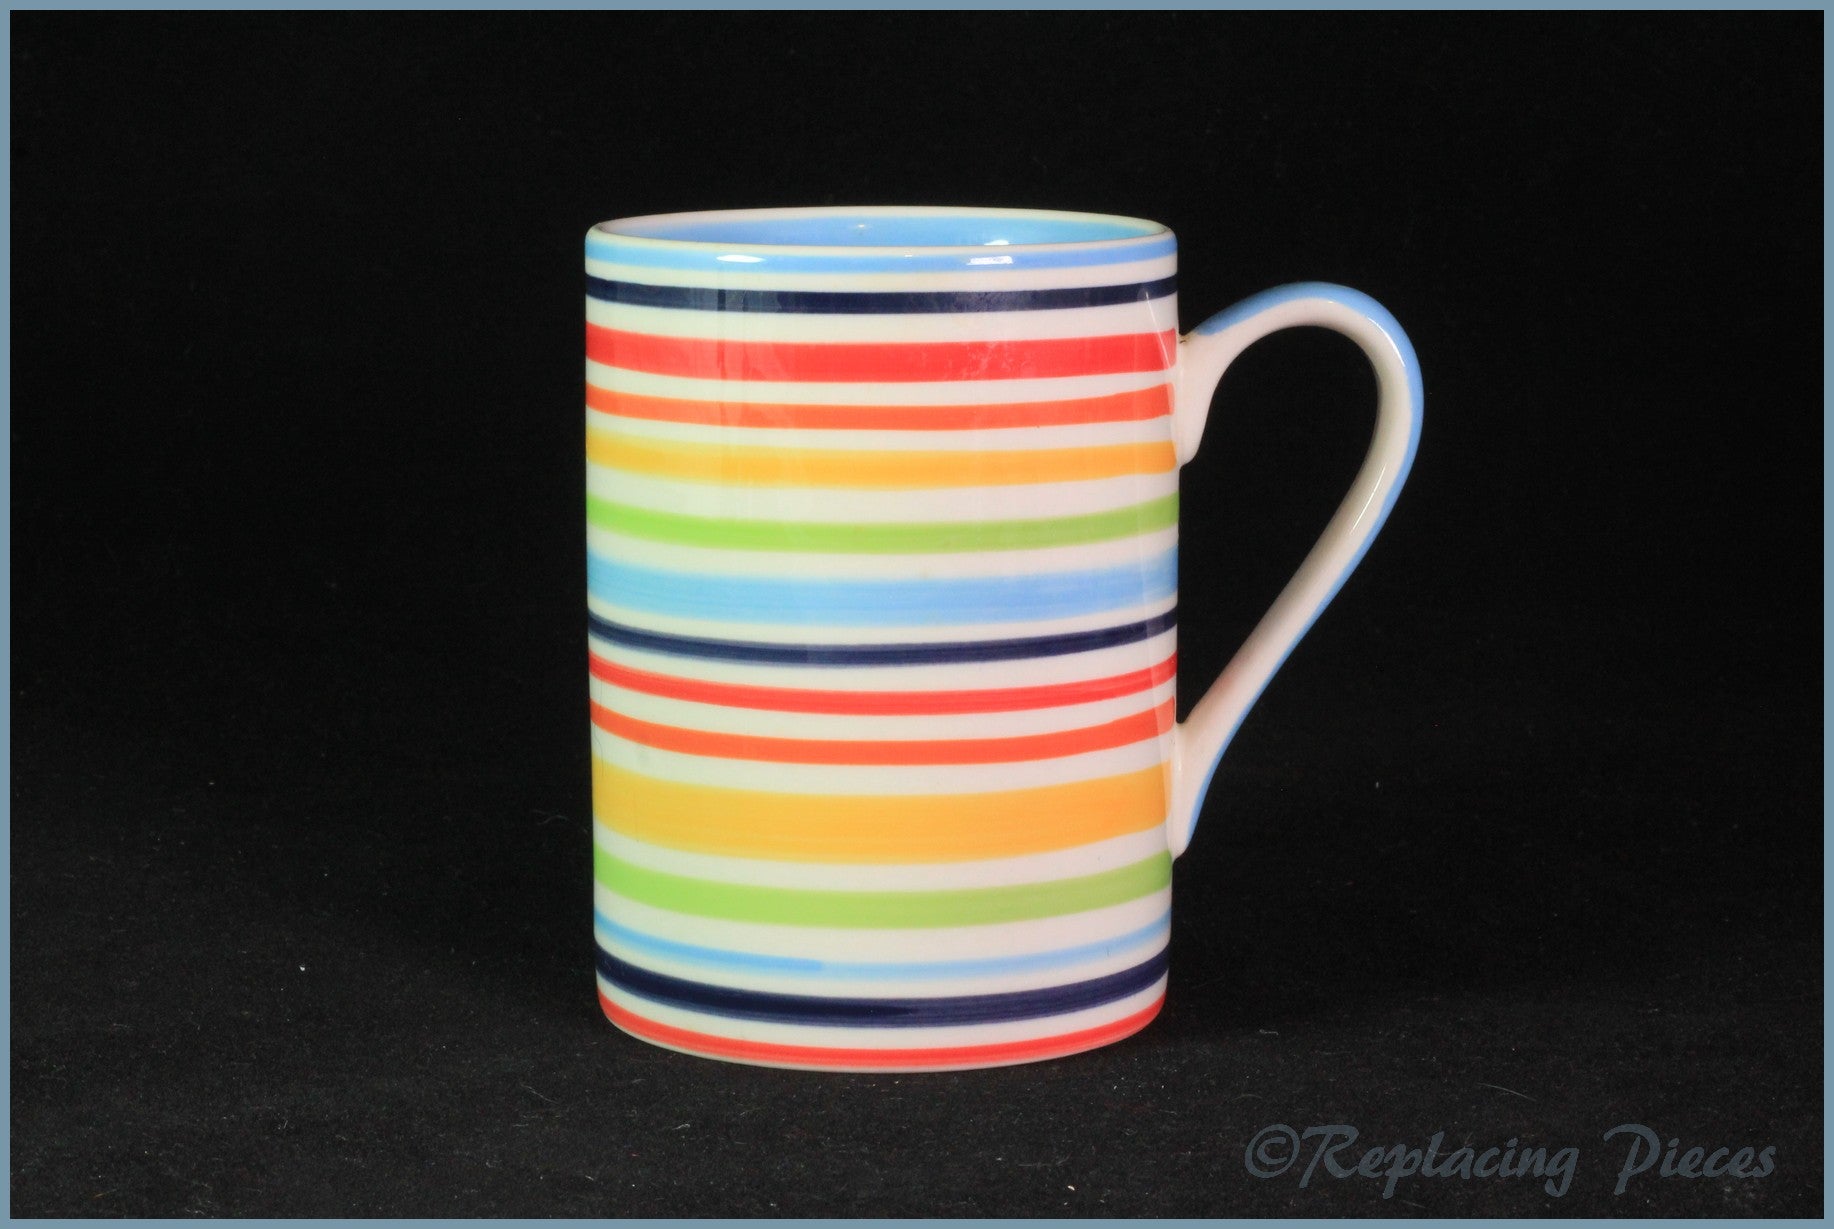 RPW69 - Whittards - Multi Coloured Striped Mug